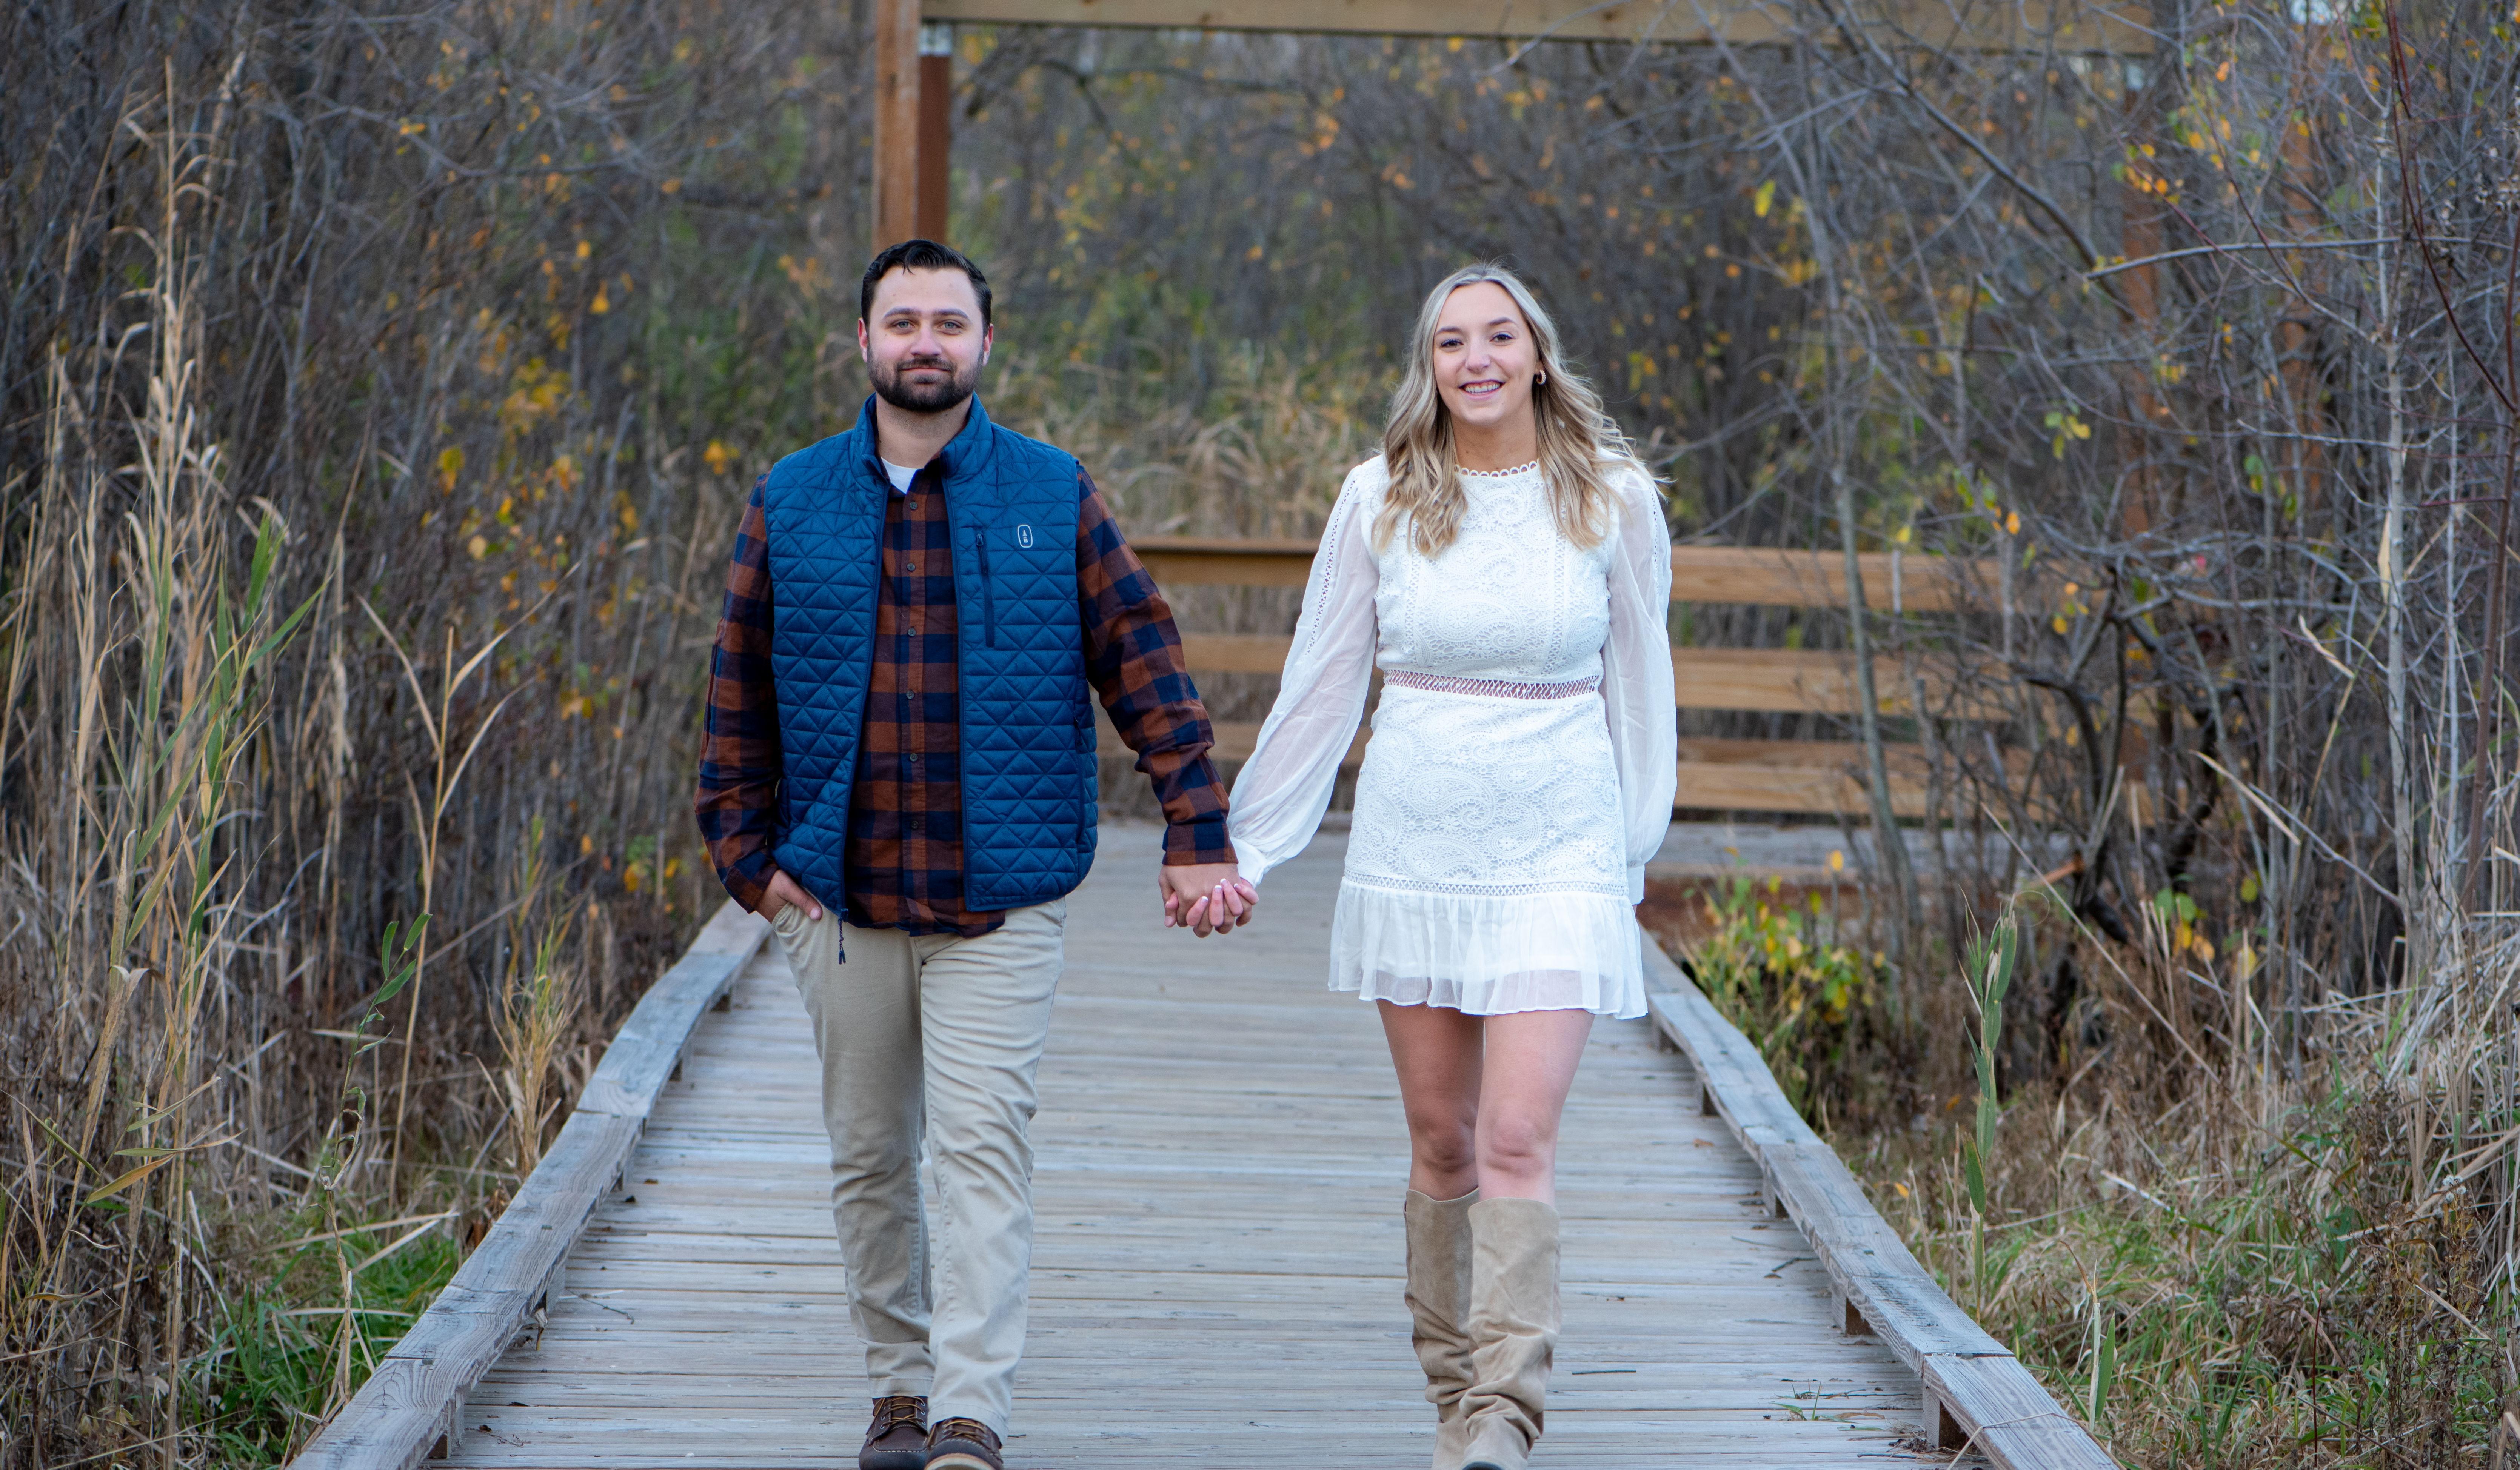 Bering's Wedding Registry inspiration from @katkatrogers & Ryan